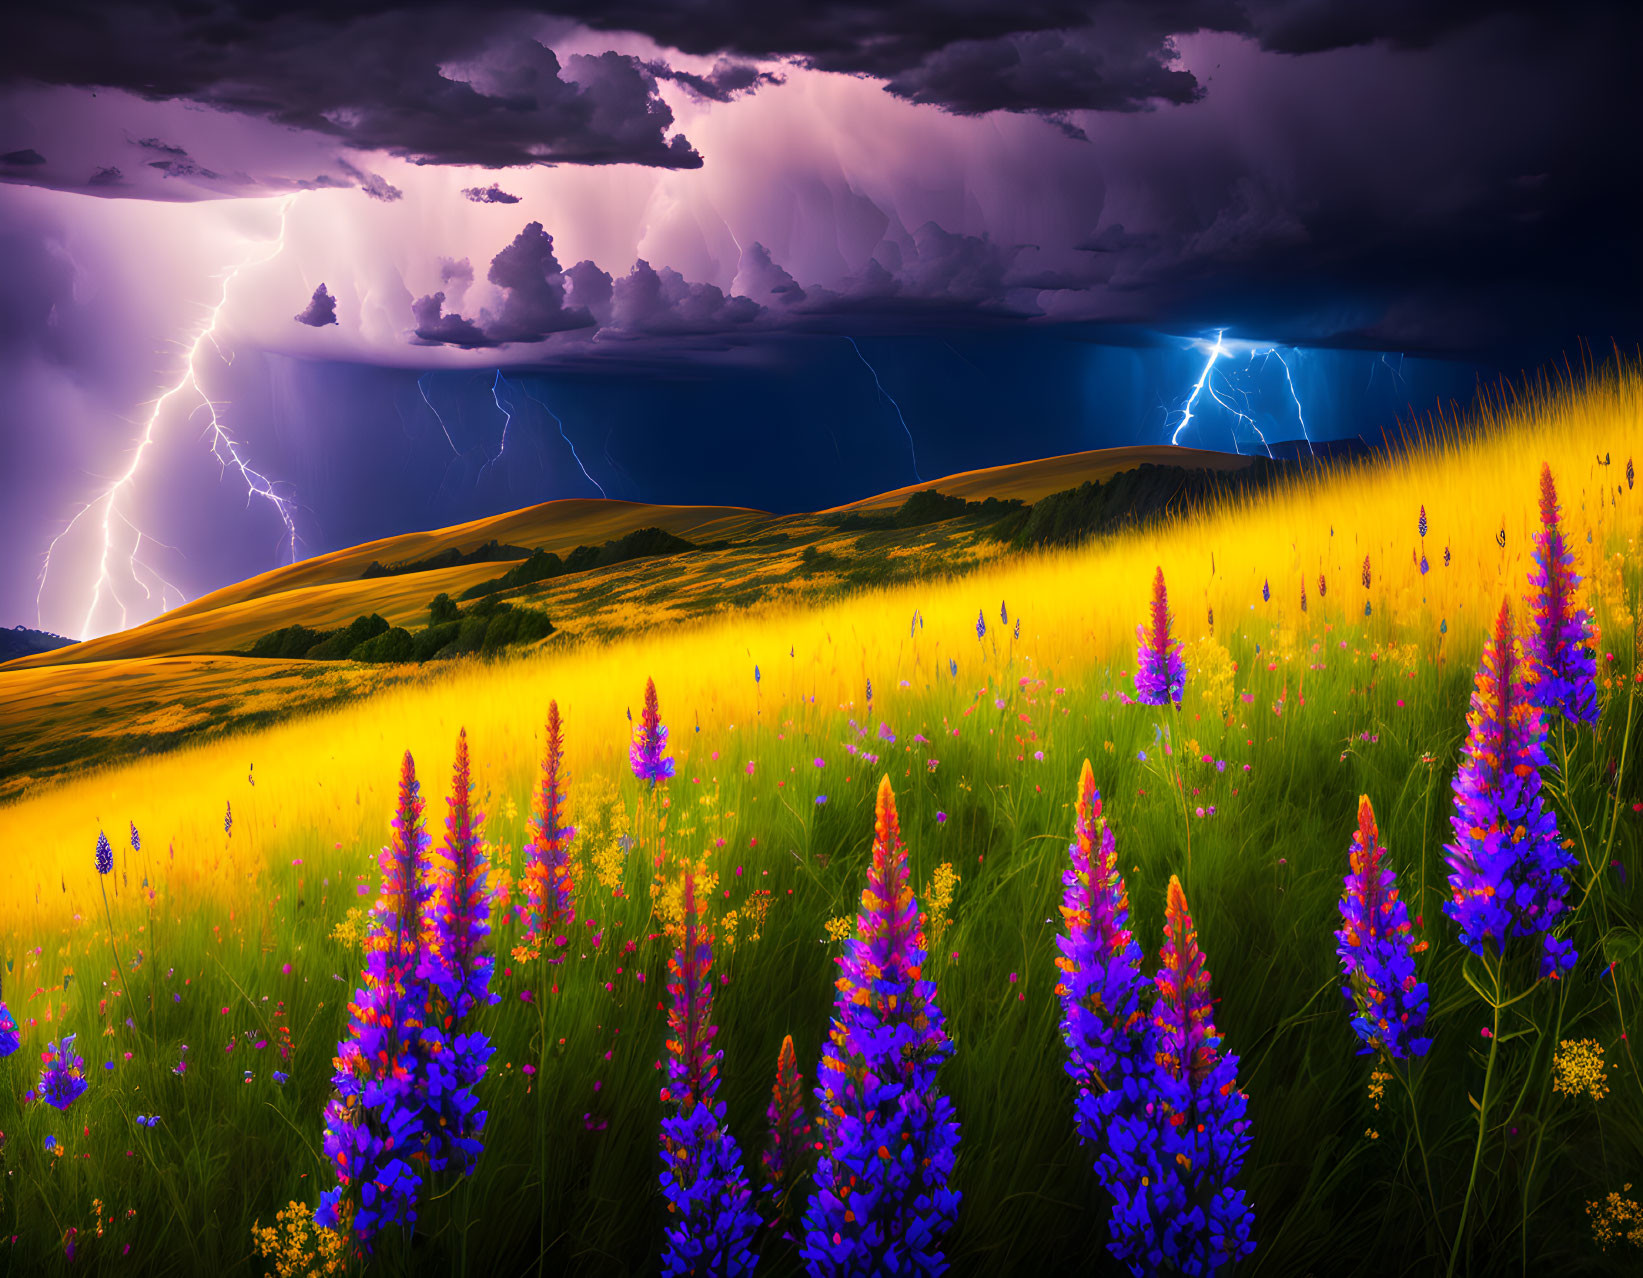 Purple Flowers Field Under Dramatic Sky with Lightning Strikes